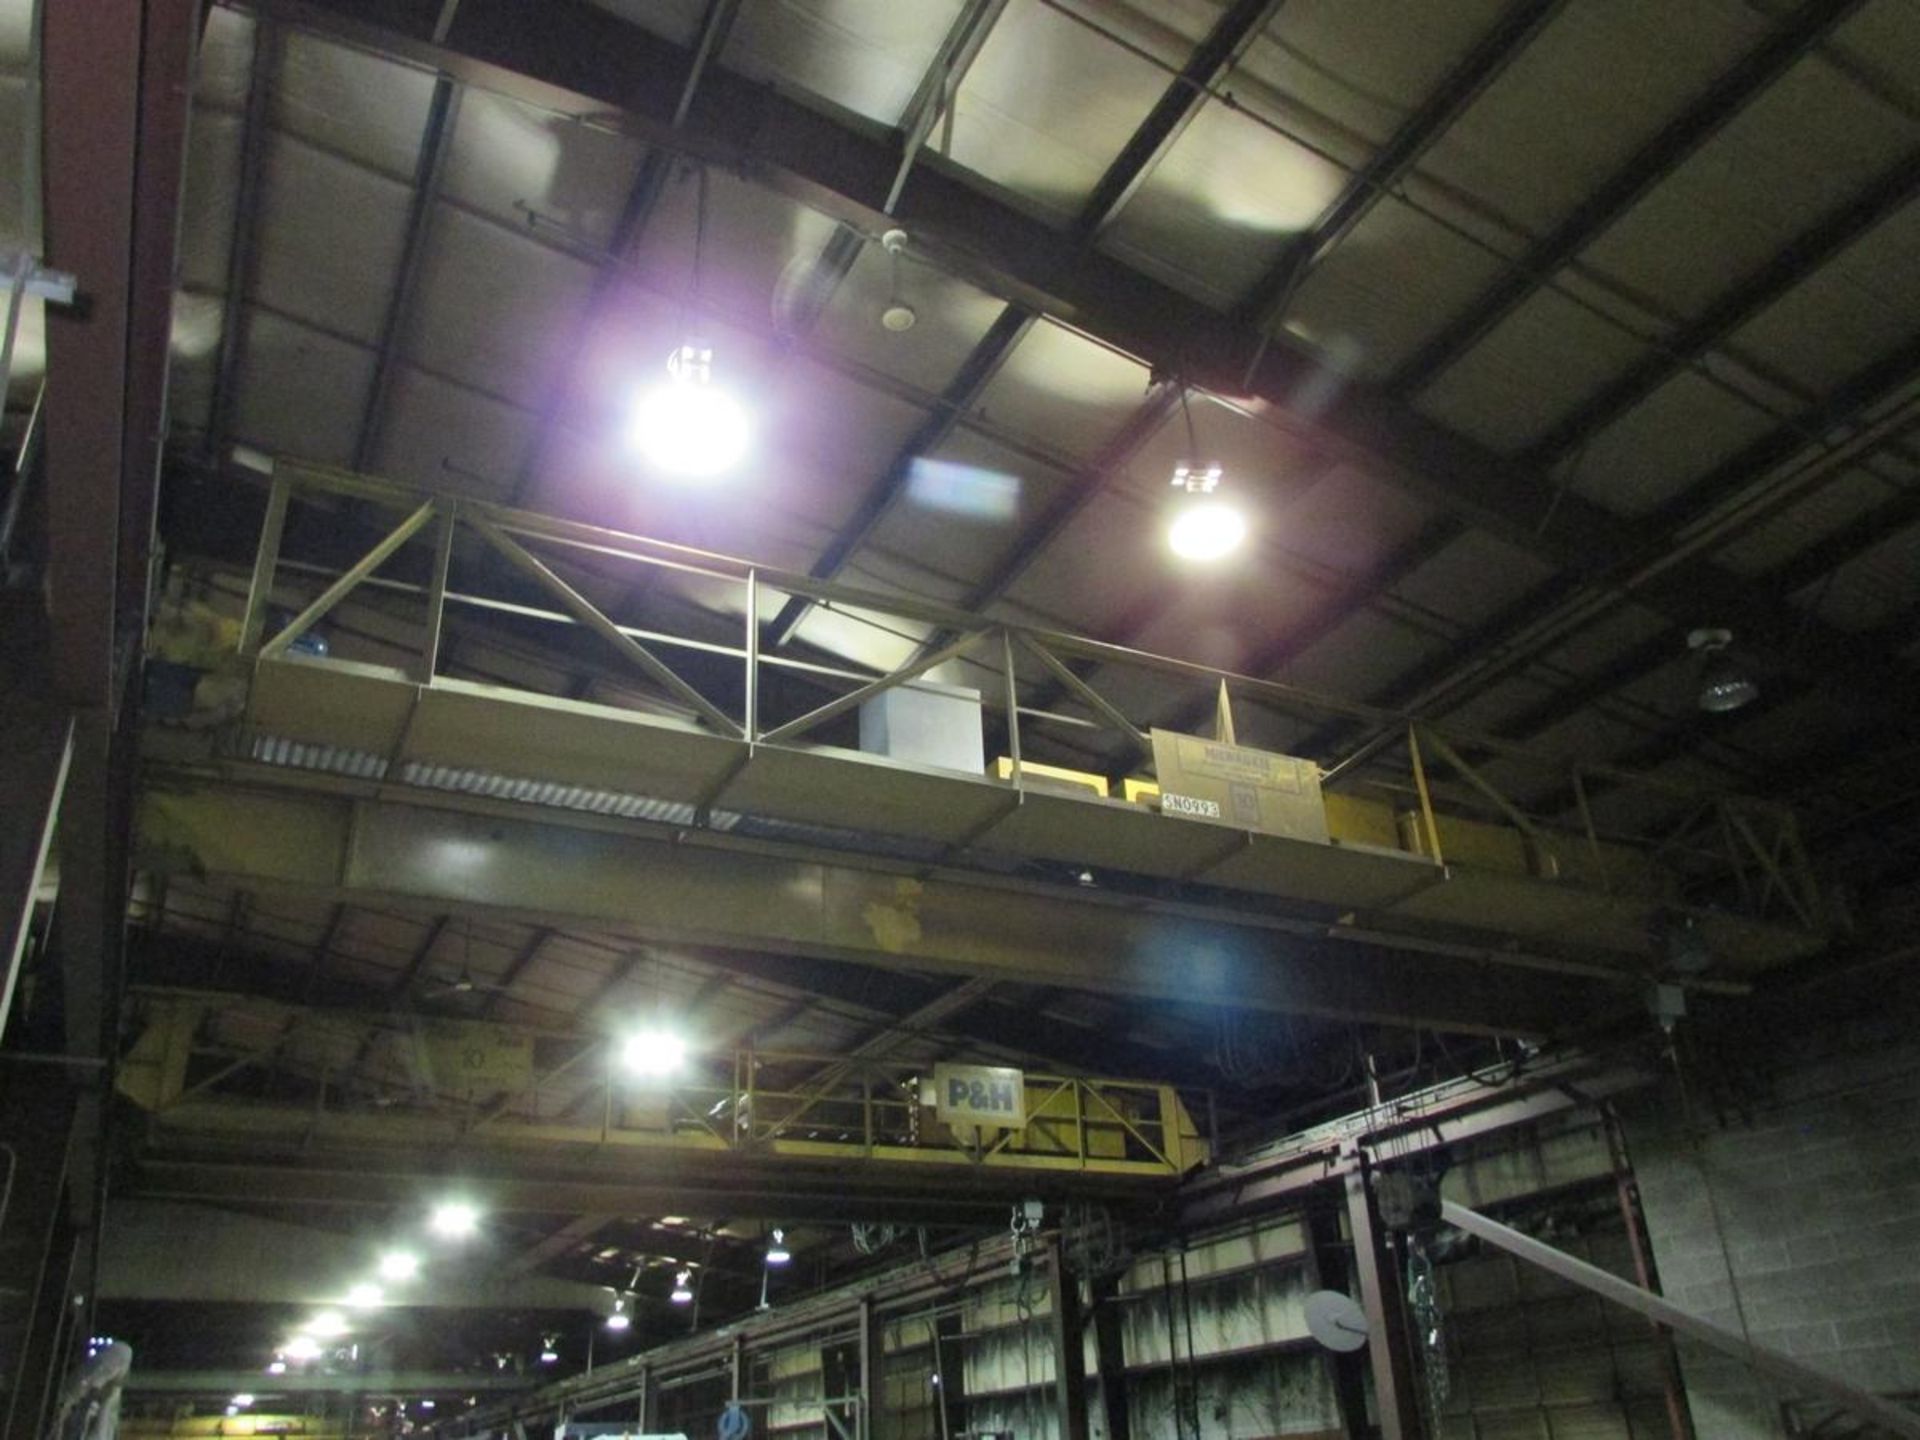 Milwaukee Crane 10 Ton Top Running Double Girder Bridge Crane [Late Delivery] - Image 5 of 6